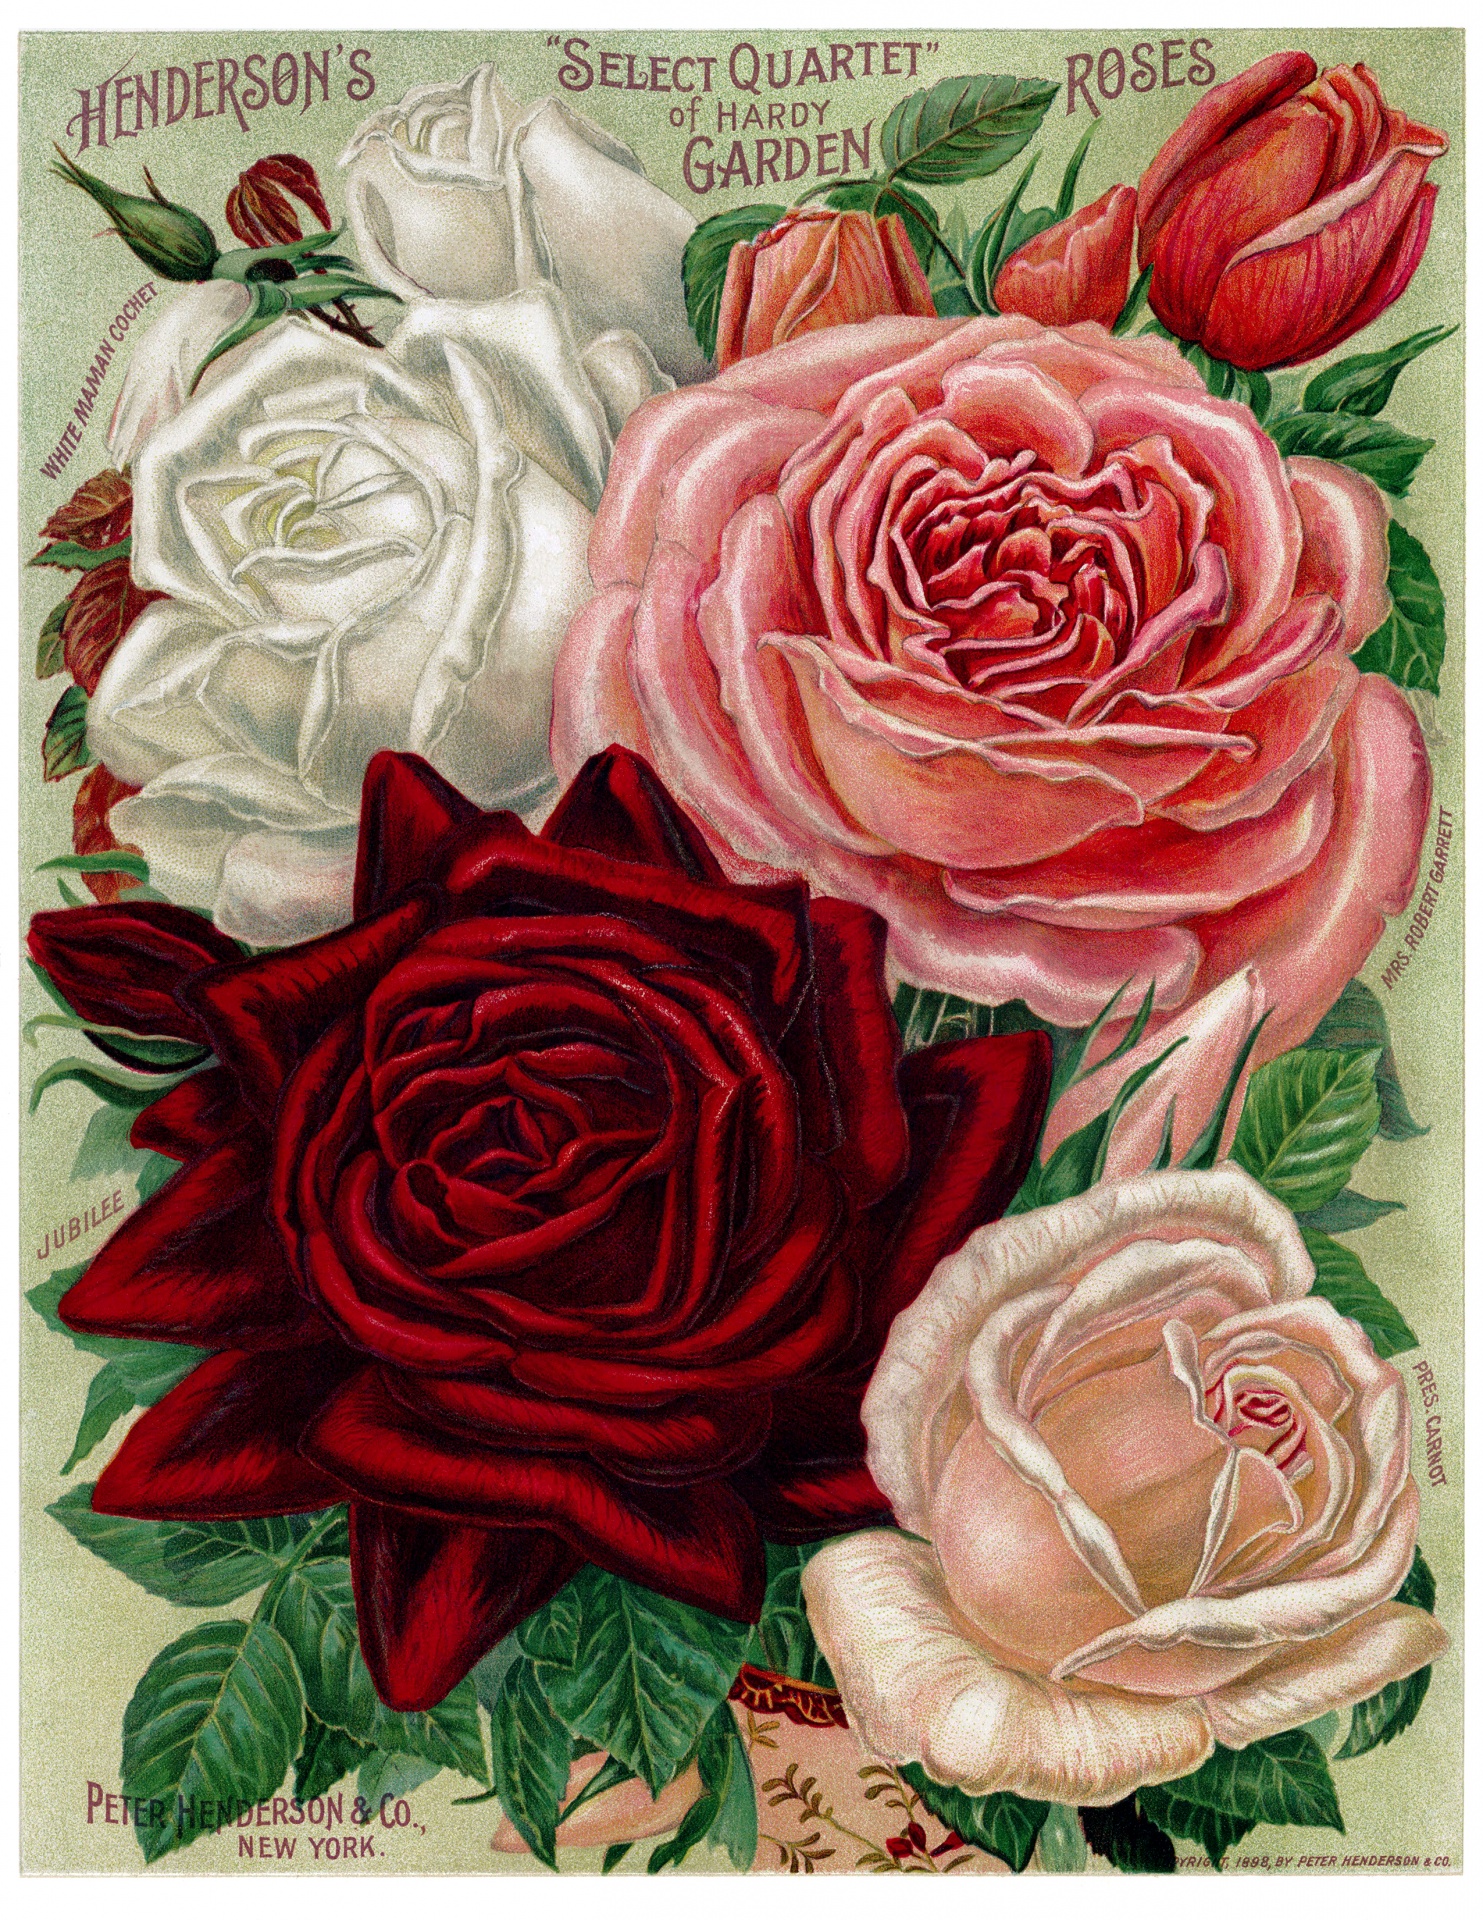 Red white and pink vintage roses illustration vintage advertisement